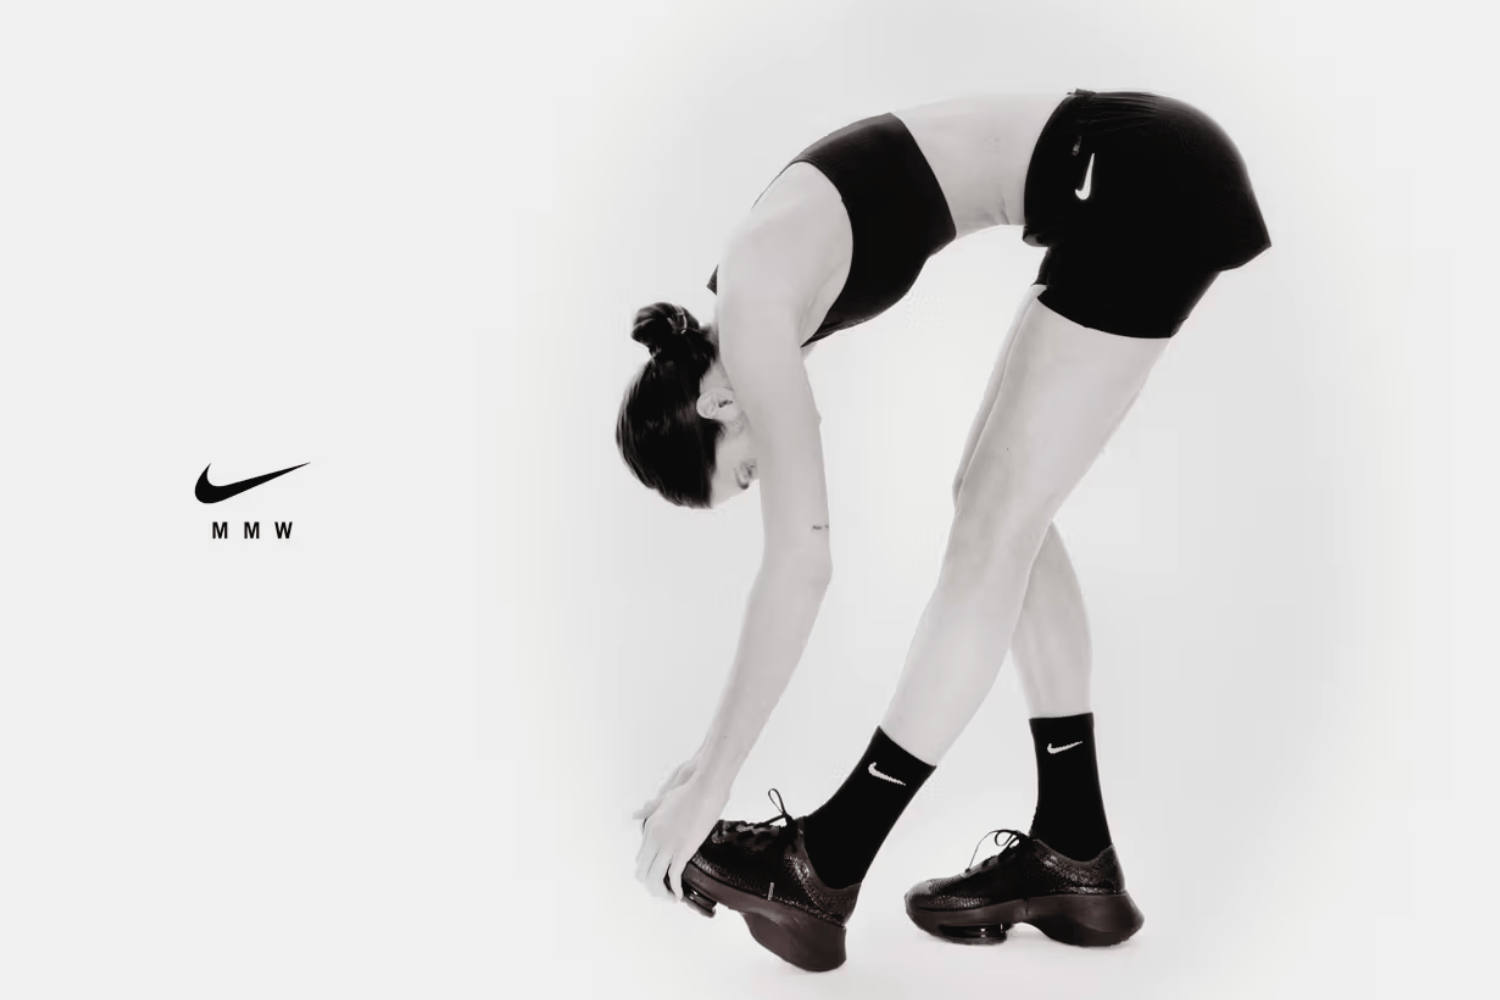 De MMW x Nike Yoga collectie herdefinieert yogakleding